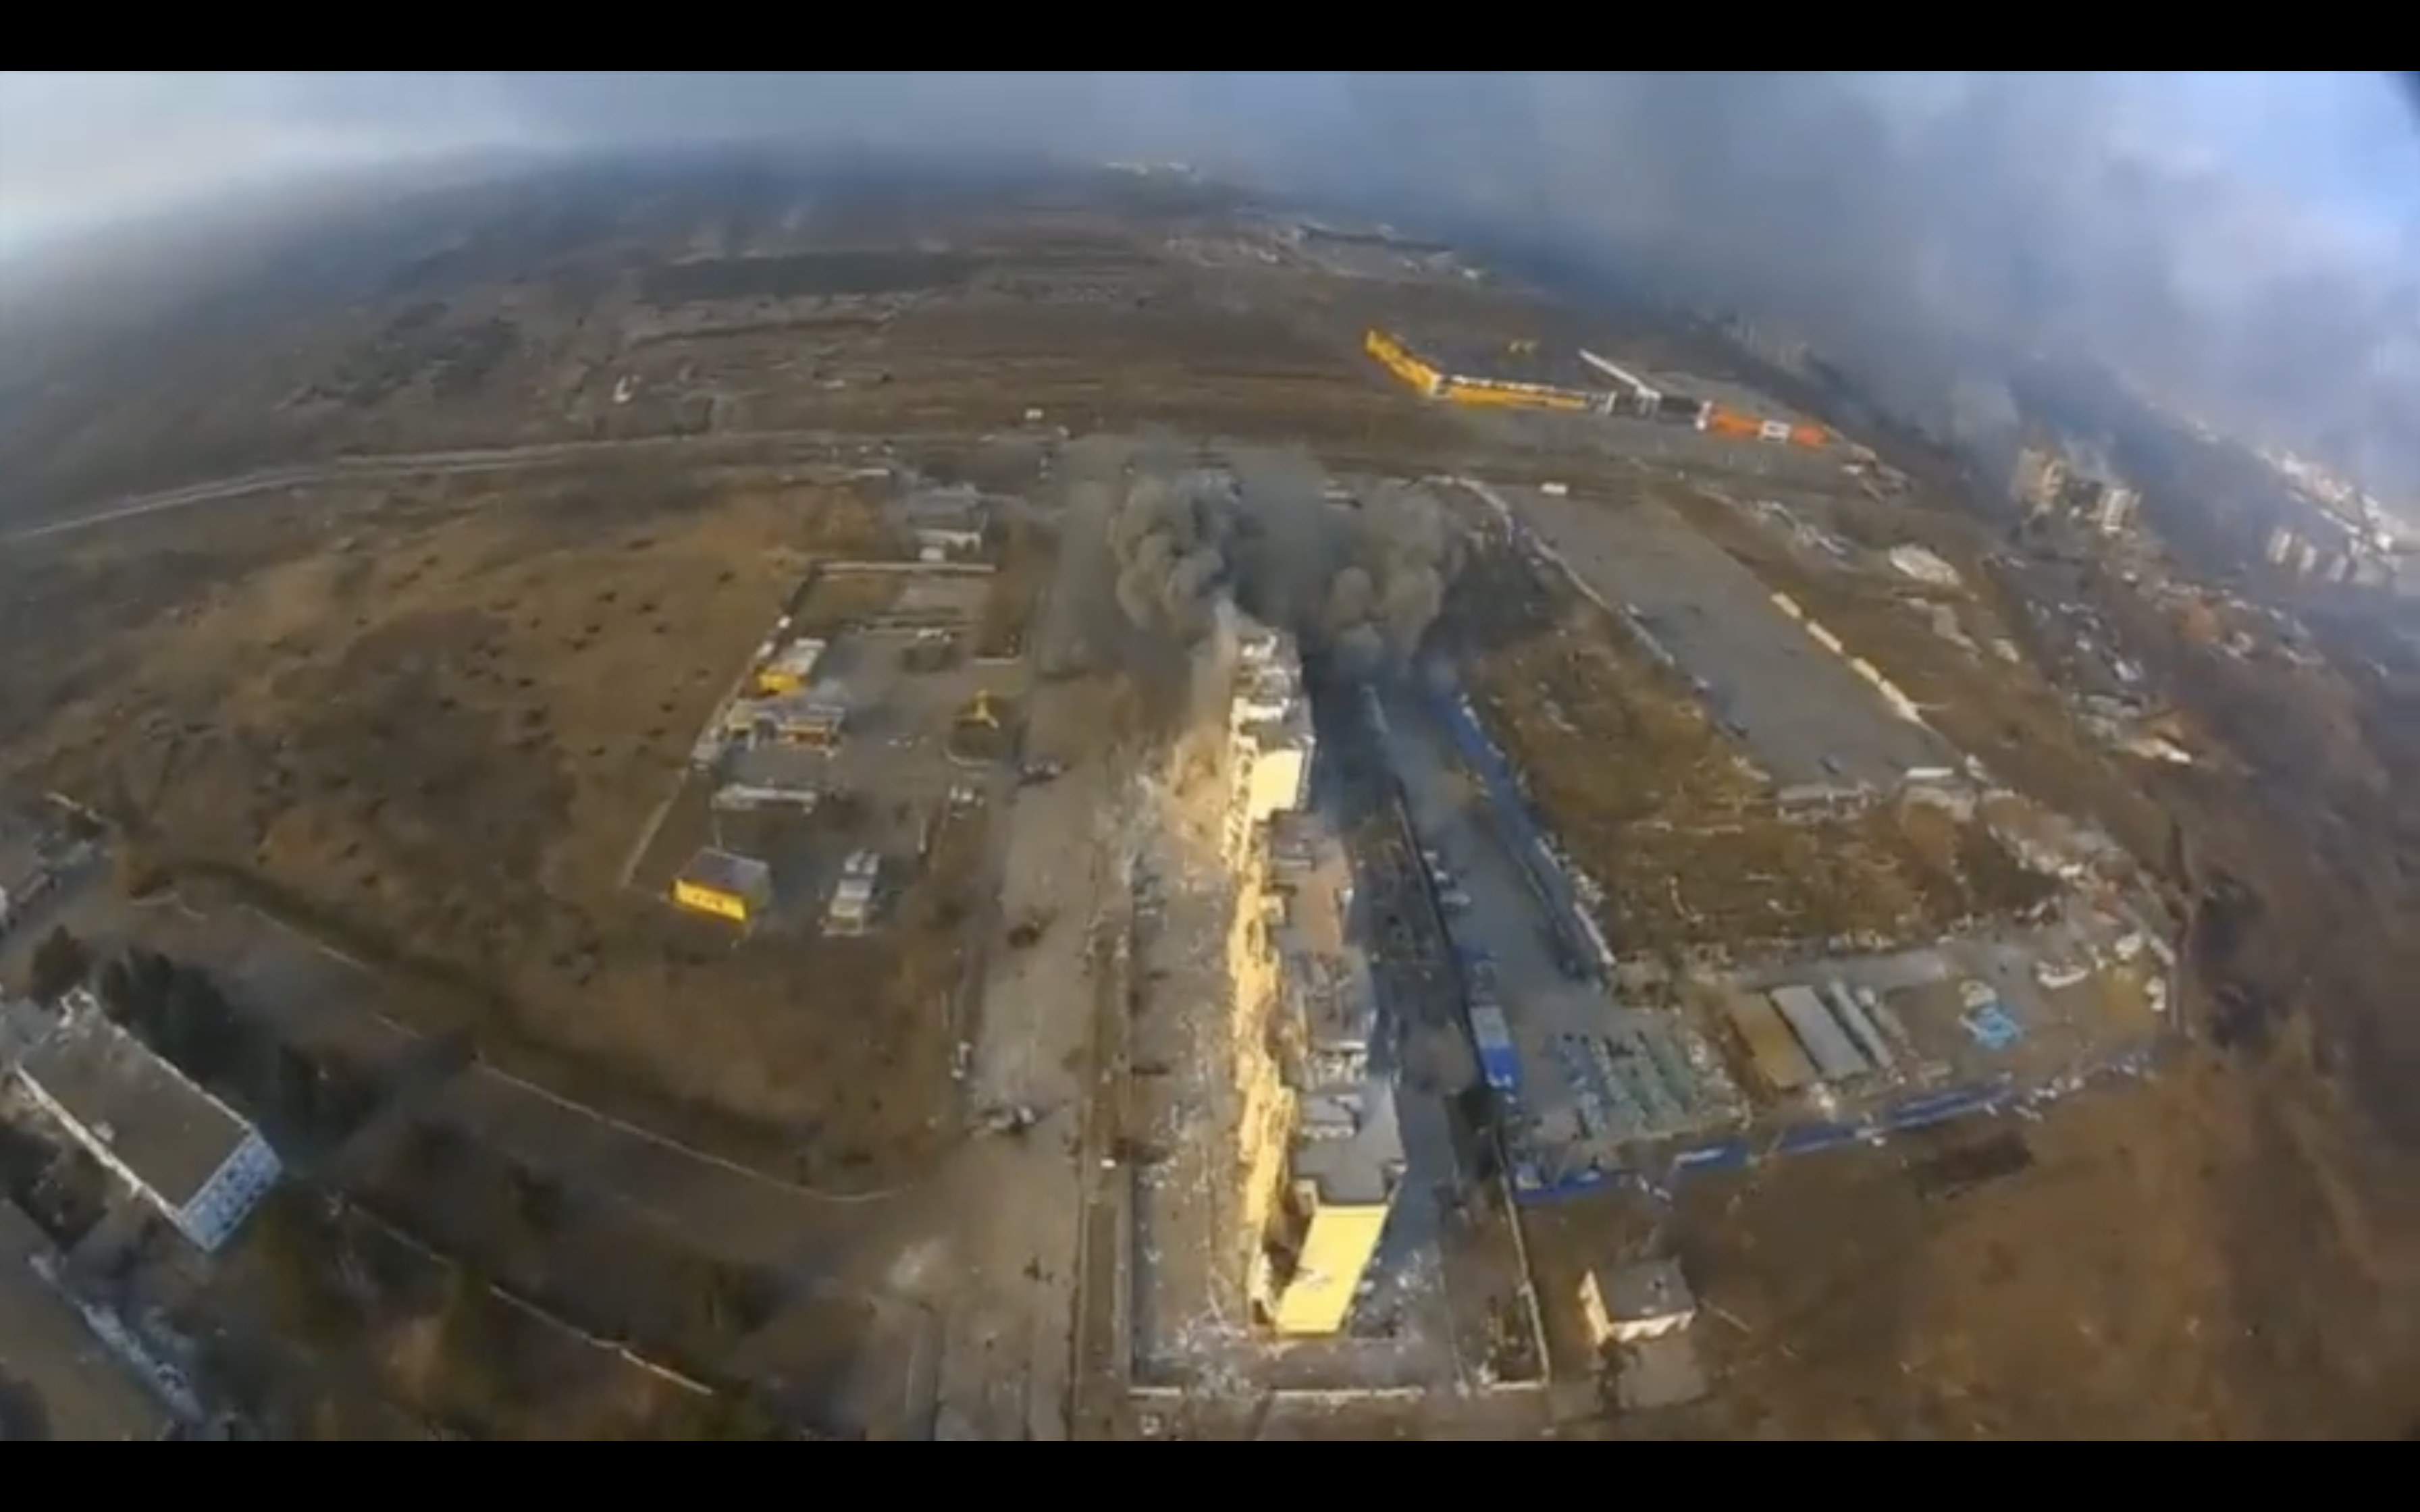 Drone still showing destructive shelling on the citizens of Mariupol, Ukraine